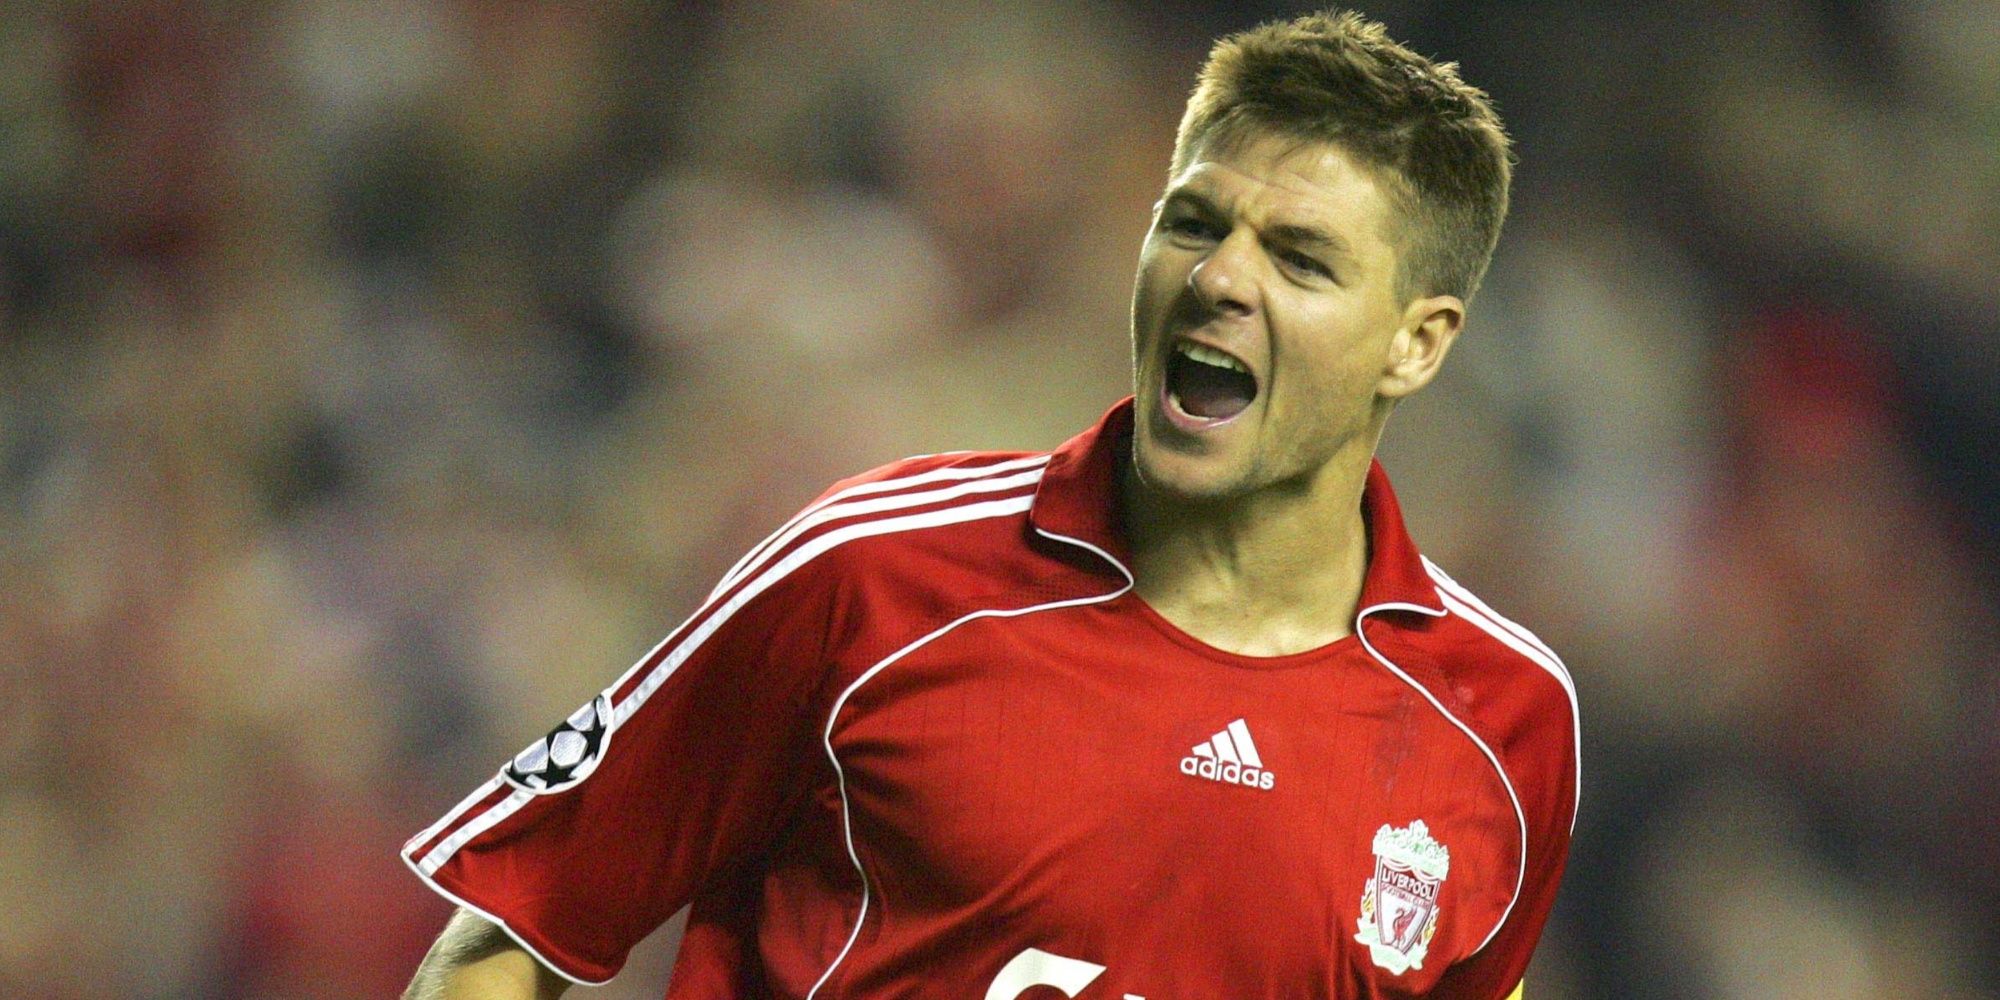 Steven Gerrard celebrates a goal for Liverpool with a roar